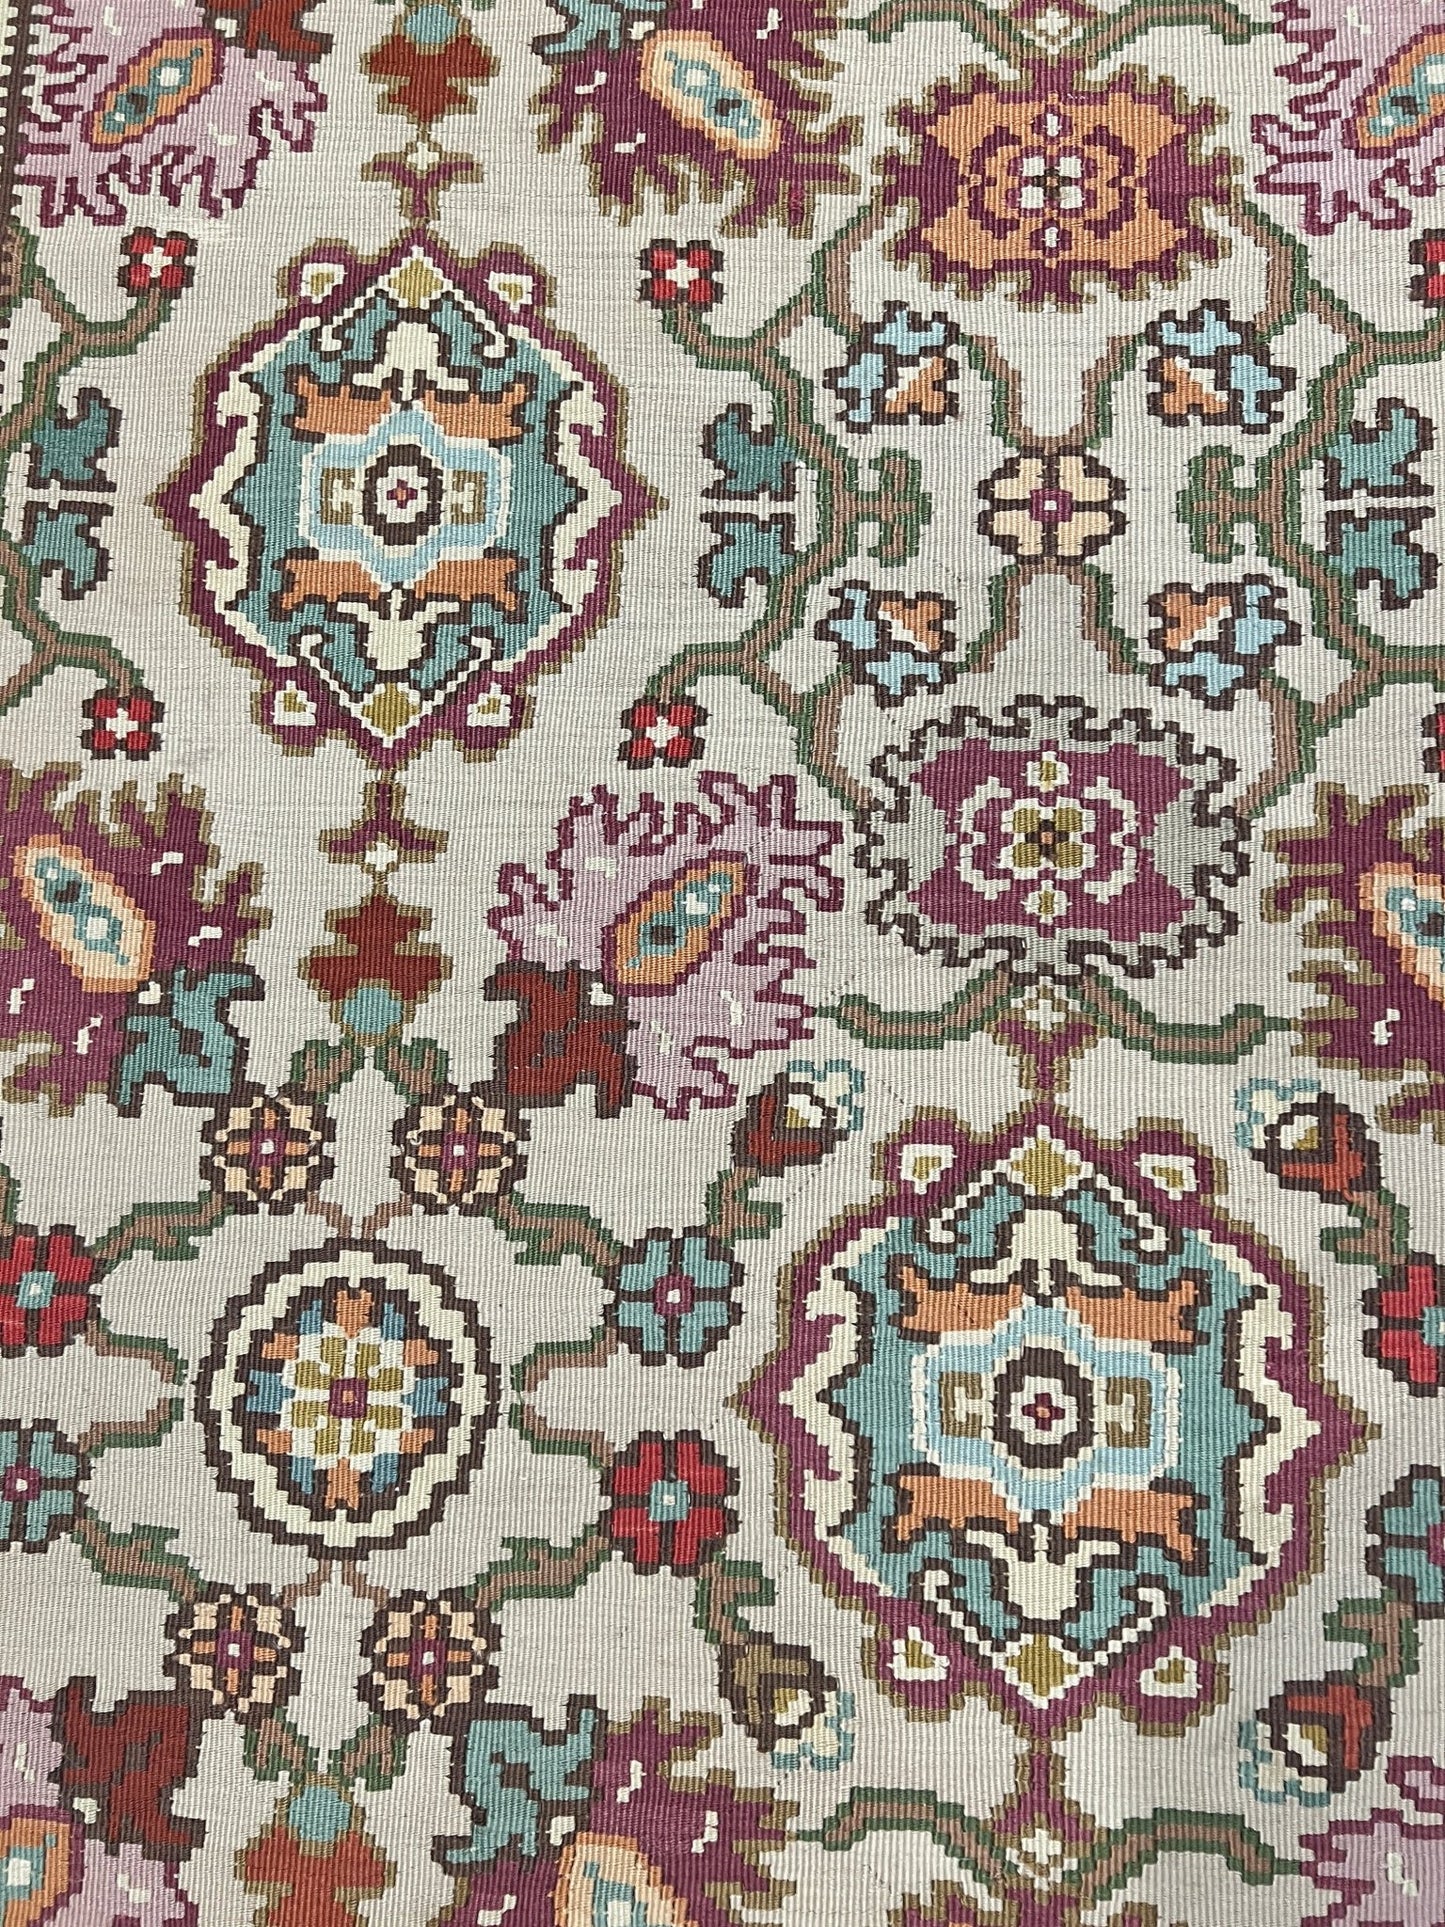 Antique Floral Balkan Turkish kilim rug. Oriental rugs shop san Francisco bay area. Buy Kilim rug online flatweave Canada USA